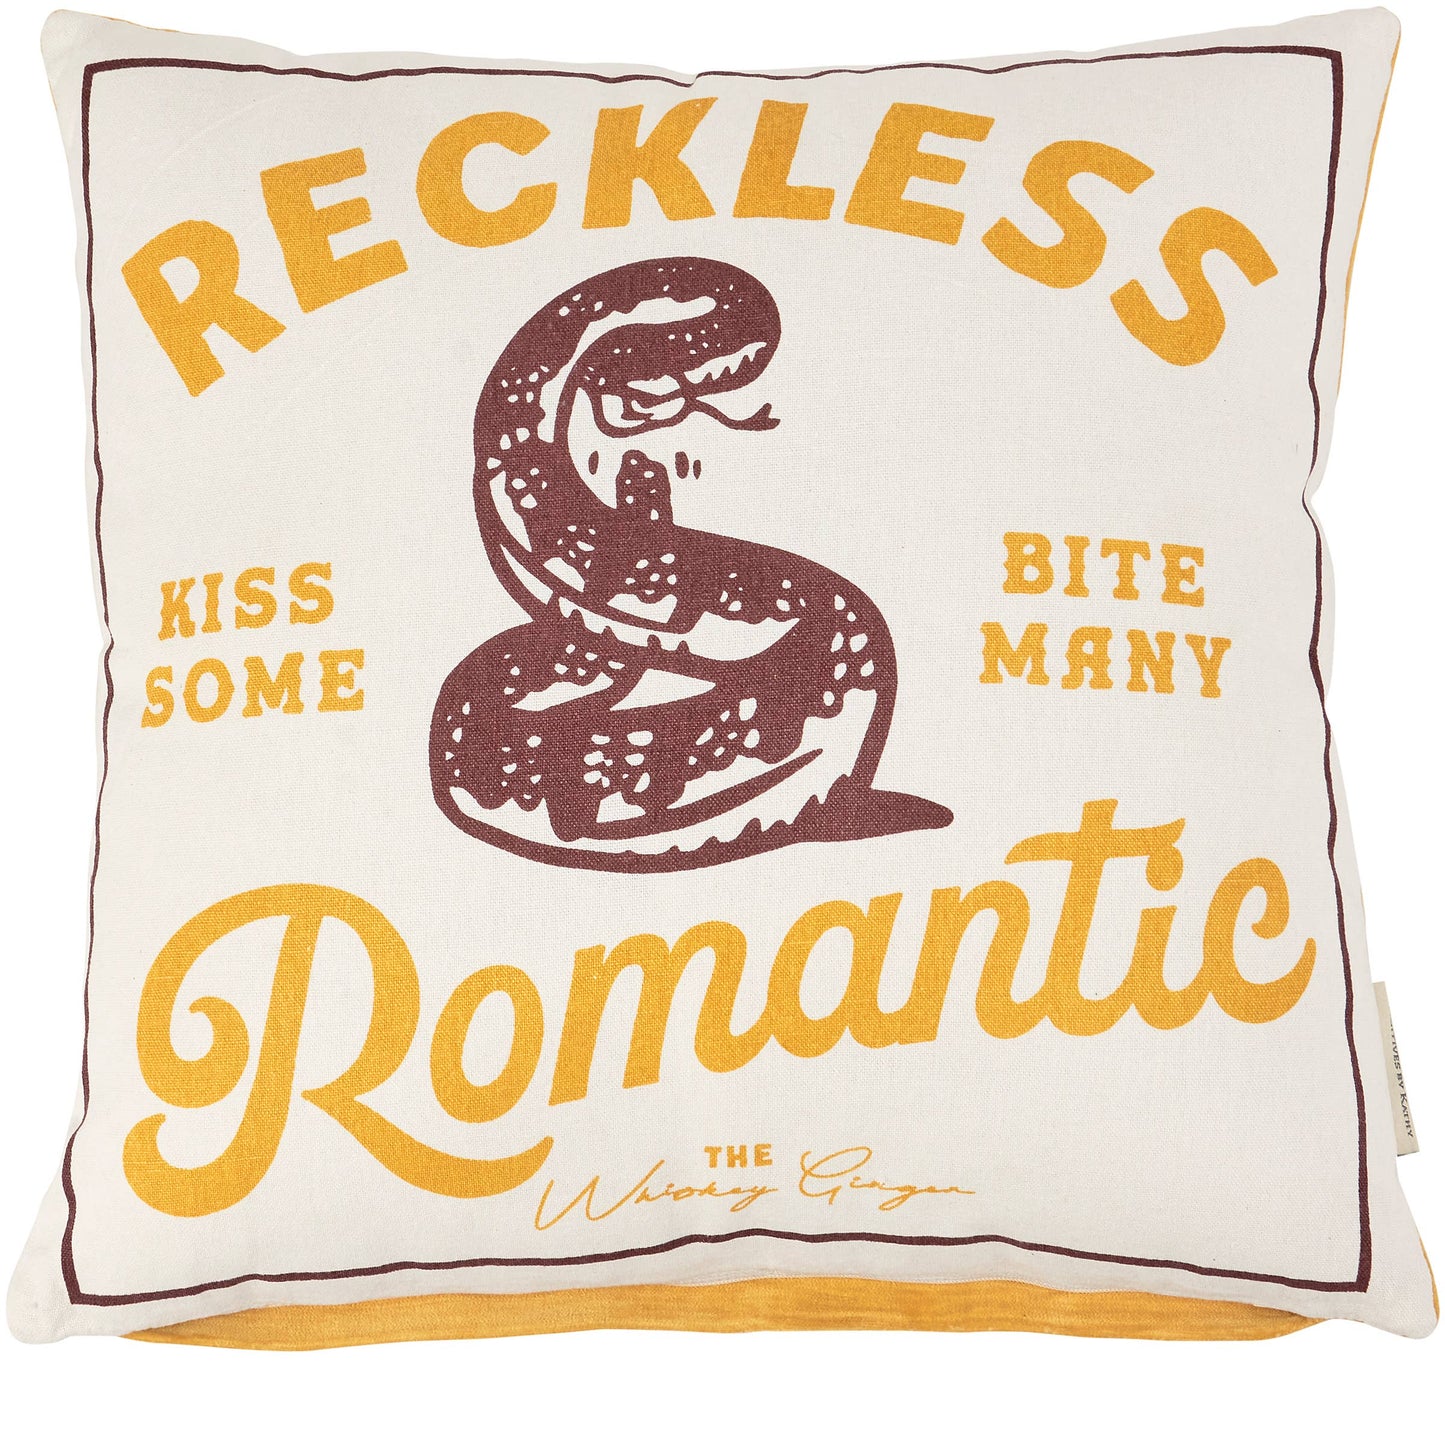 Reckless Romantic Pillow